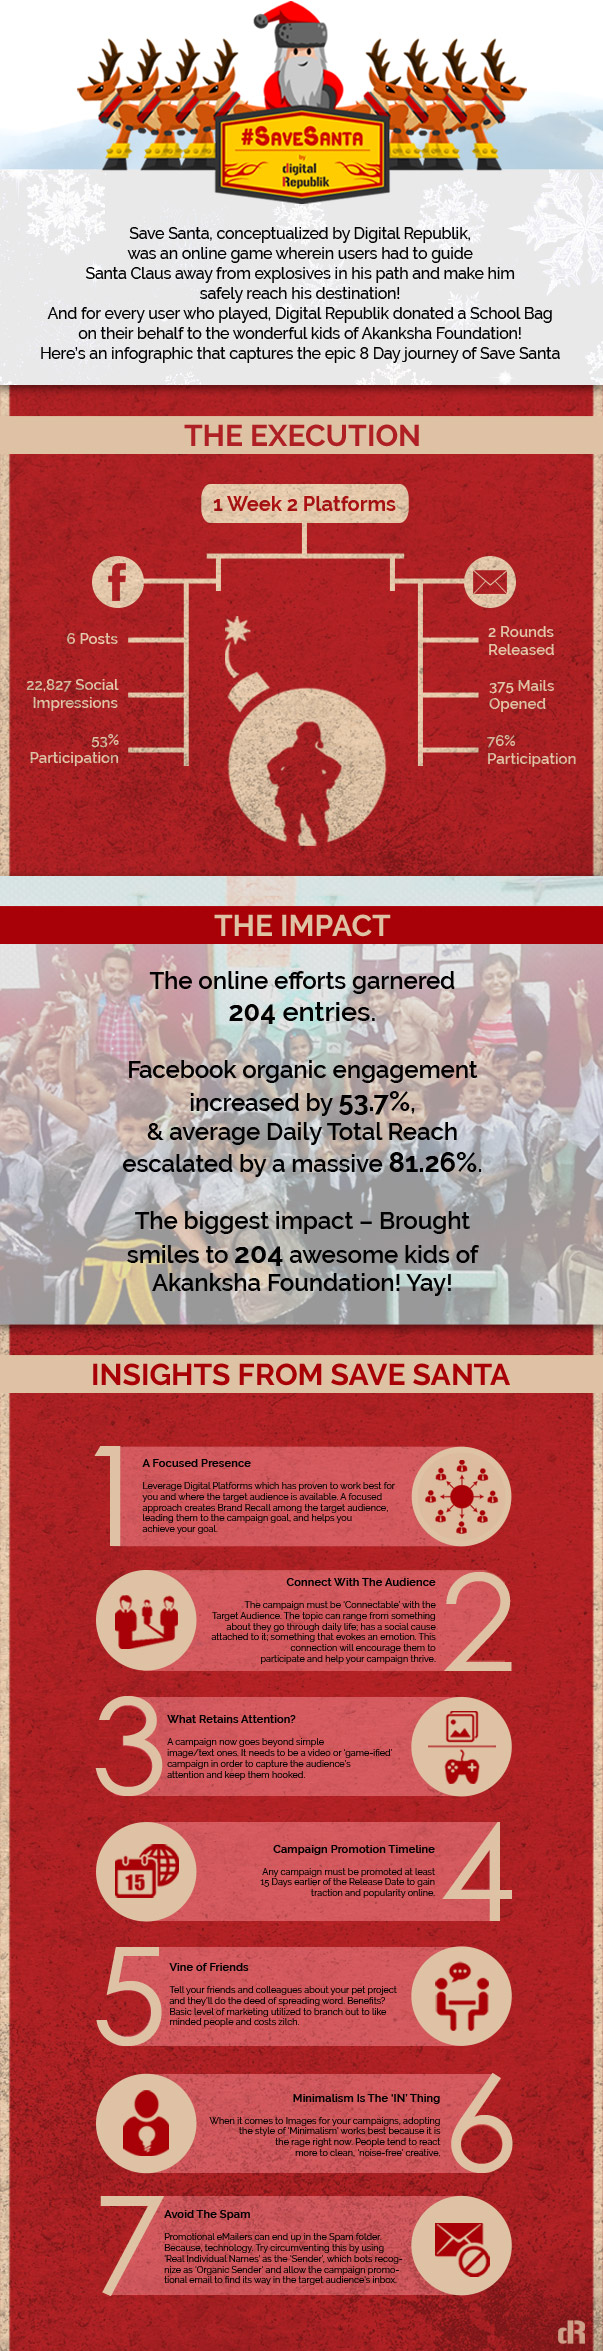 Save Santa by Digital Republik